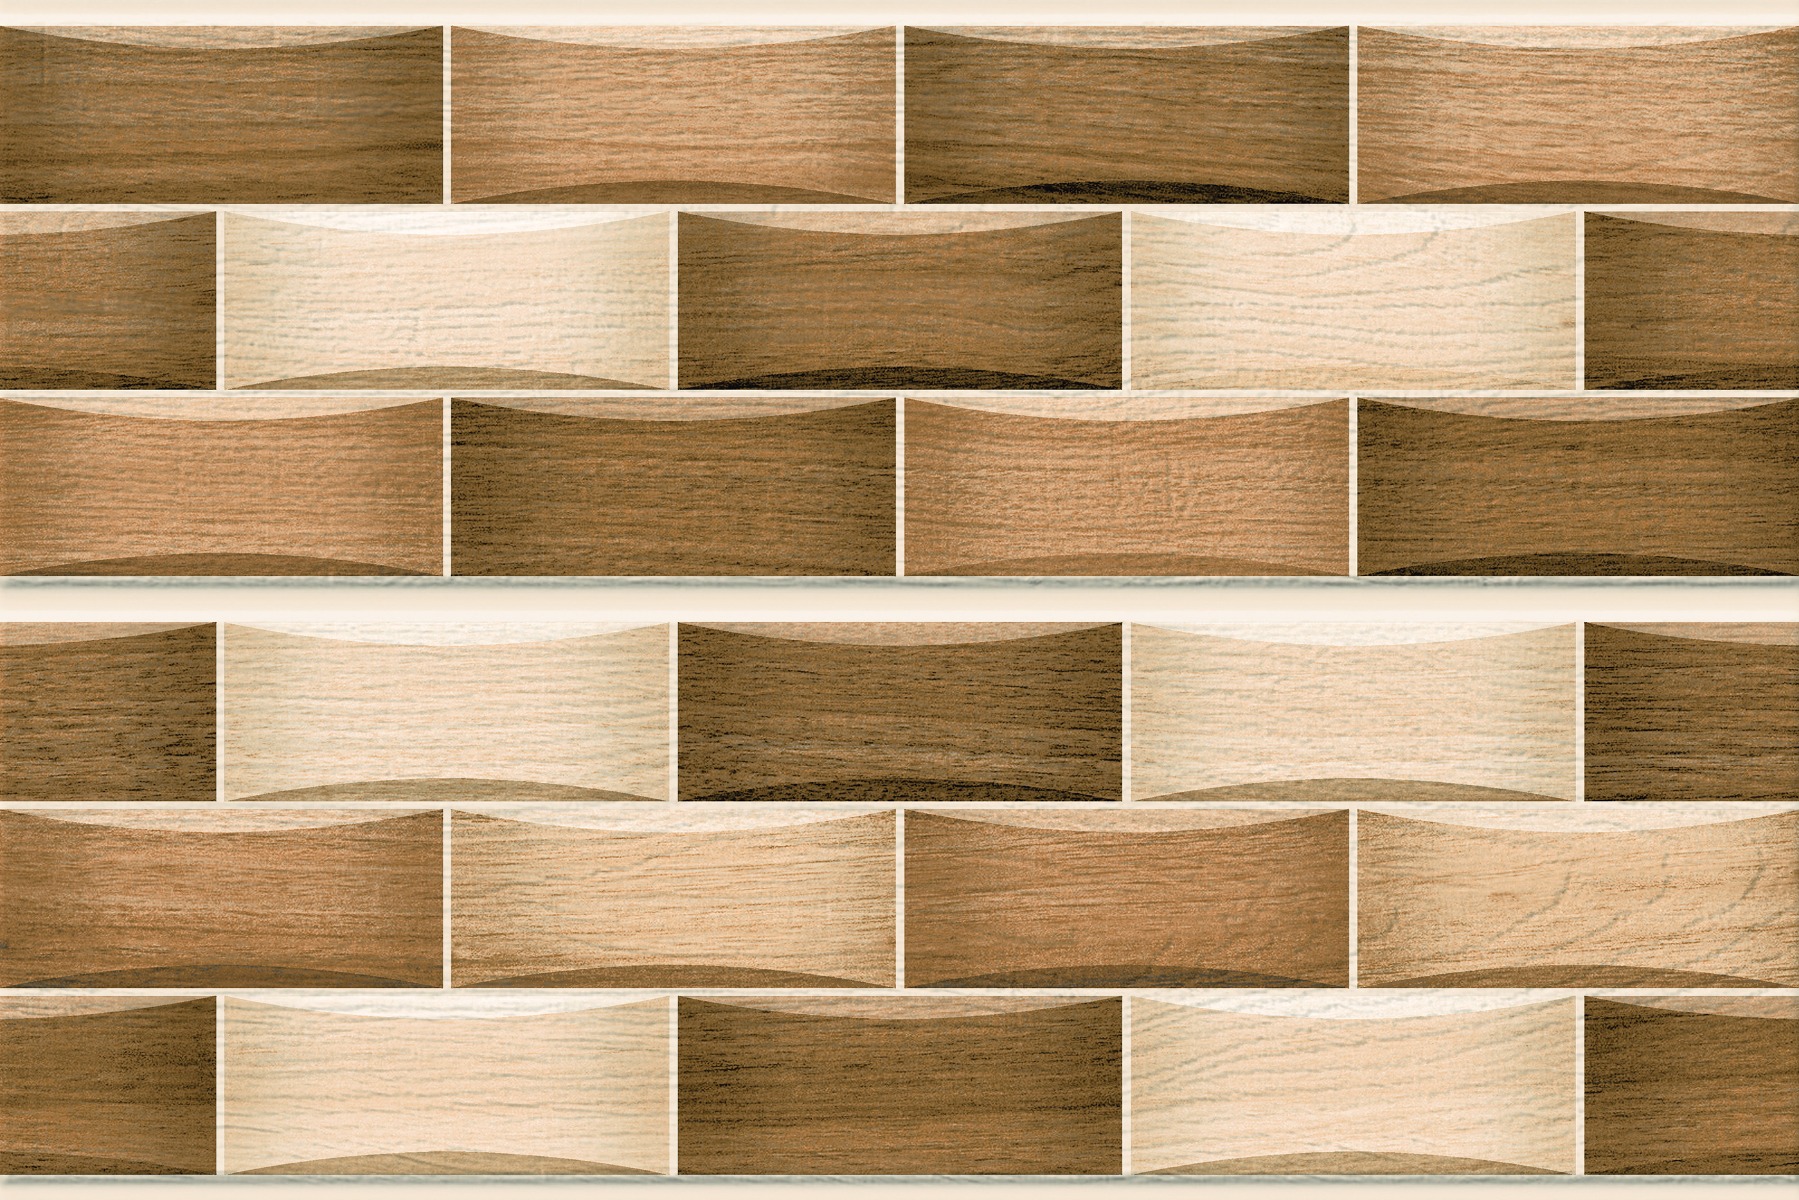 Wooden Tiles for Elevation Tiles, Accent Tiles, Outdoor Tiles, Bar/Restaurant